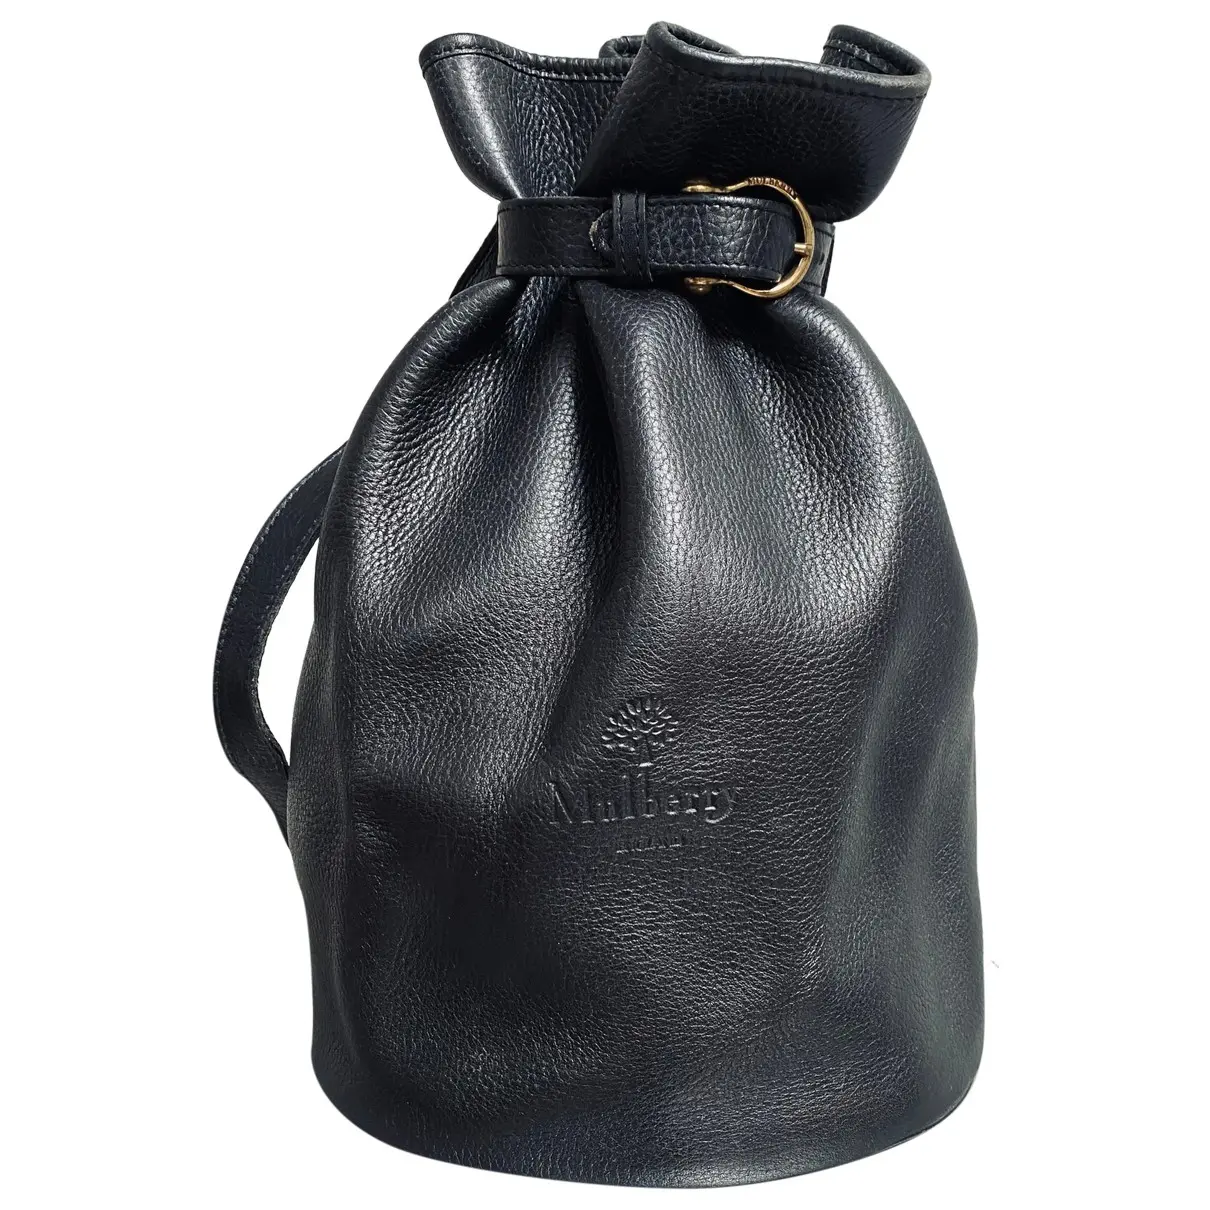 Leather handbag Mulberry - Vintage